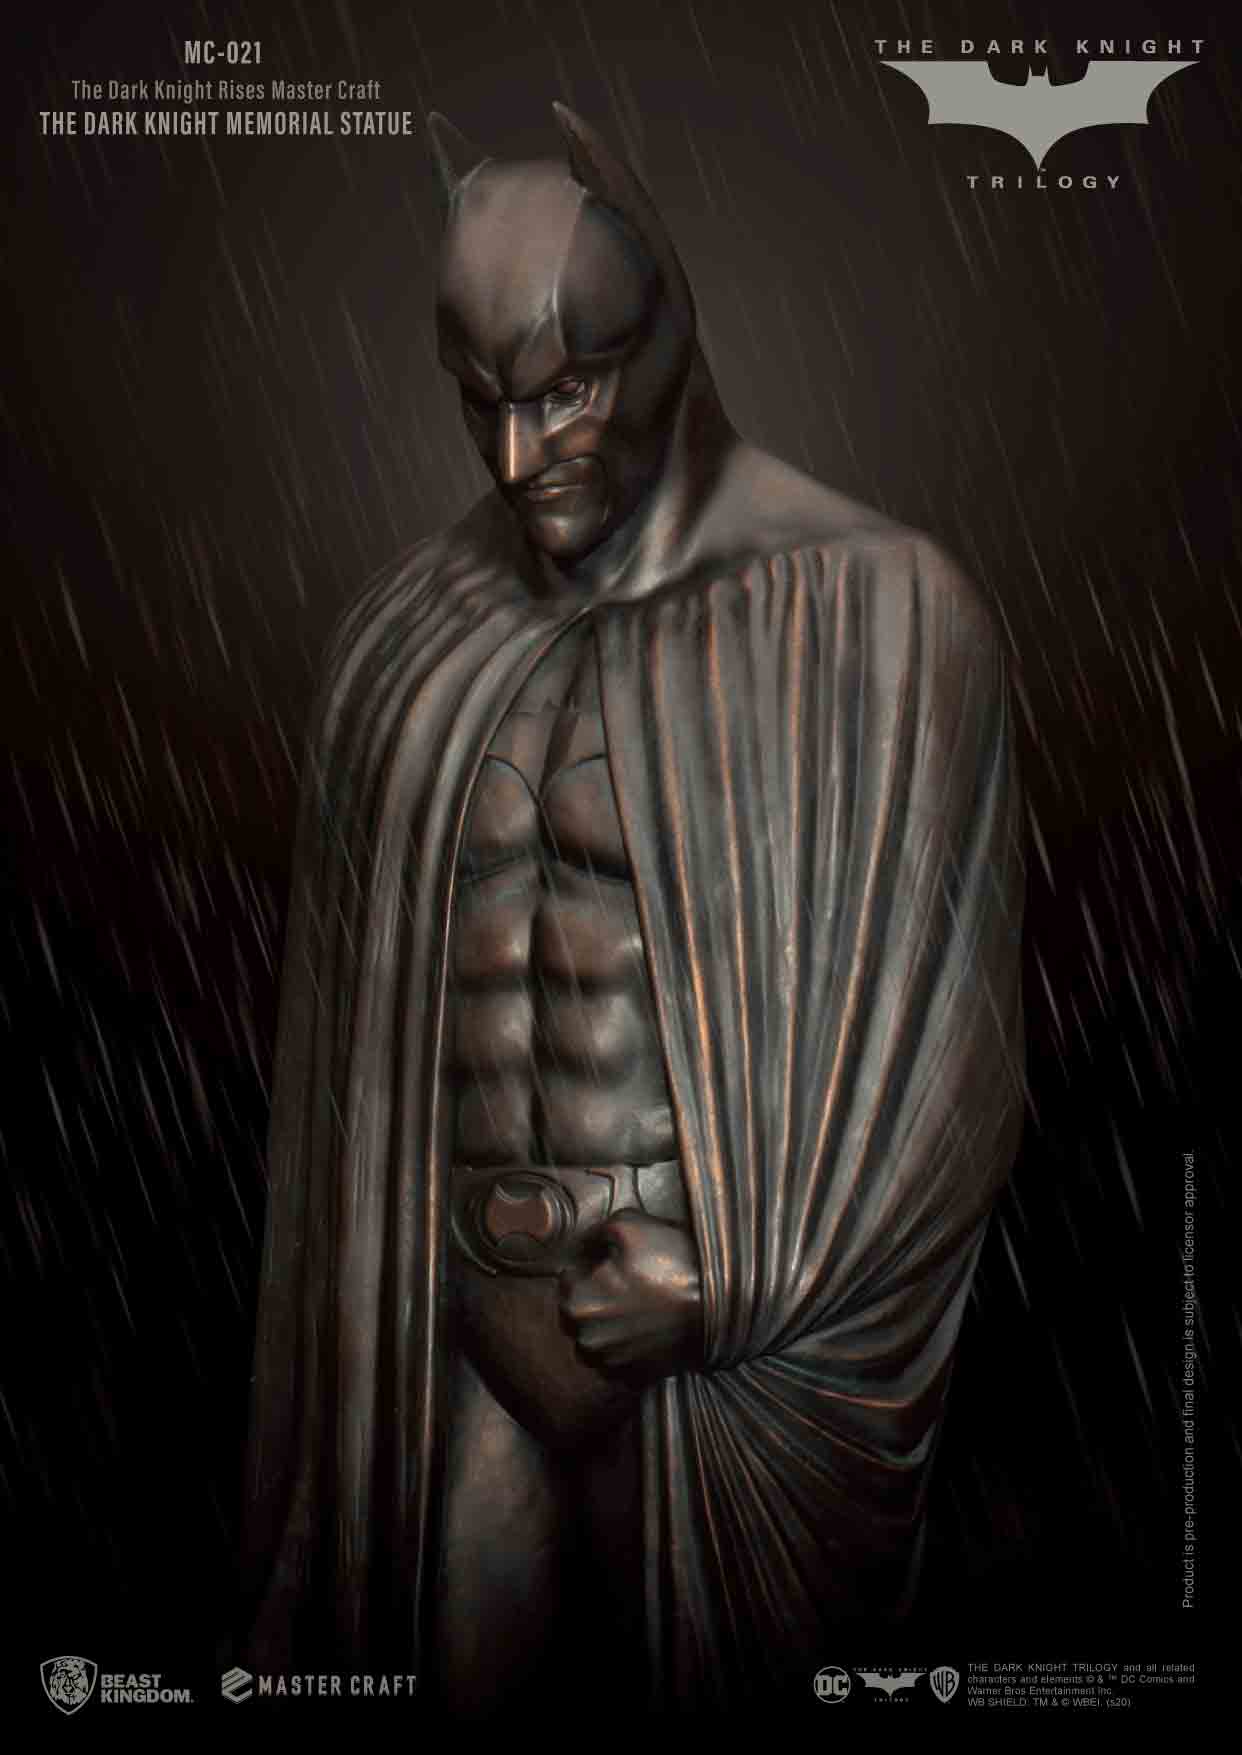 DC Master Craft : The Dark Knight Rises - The Dark Knight Memorial Statue (MC-021)